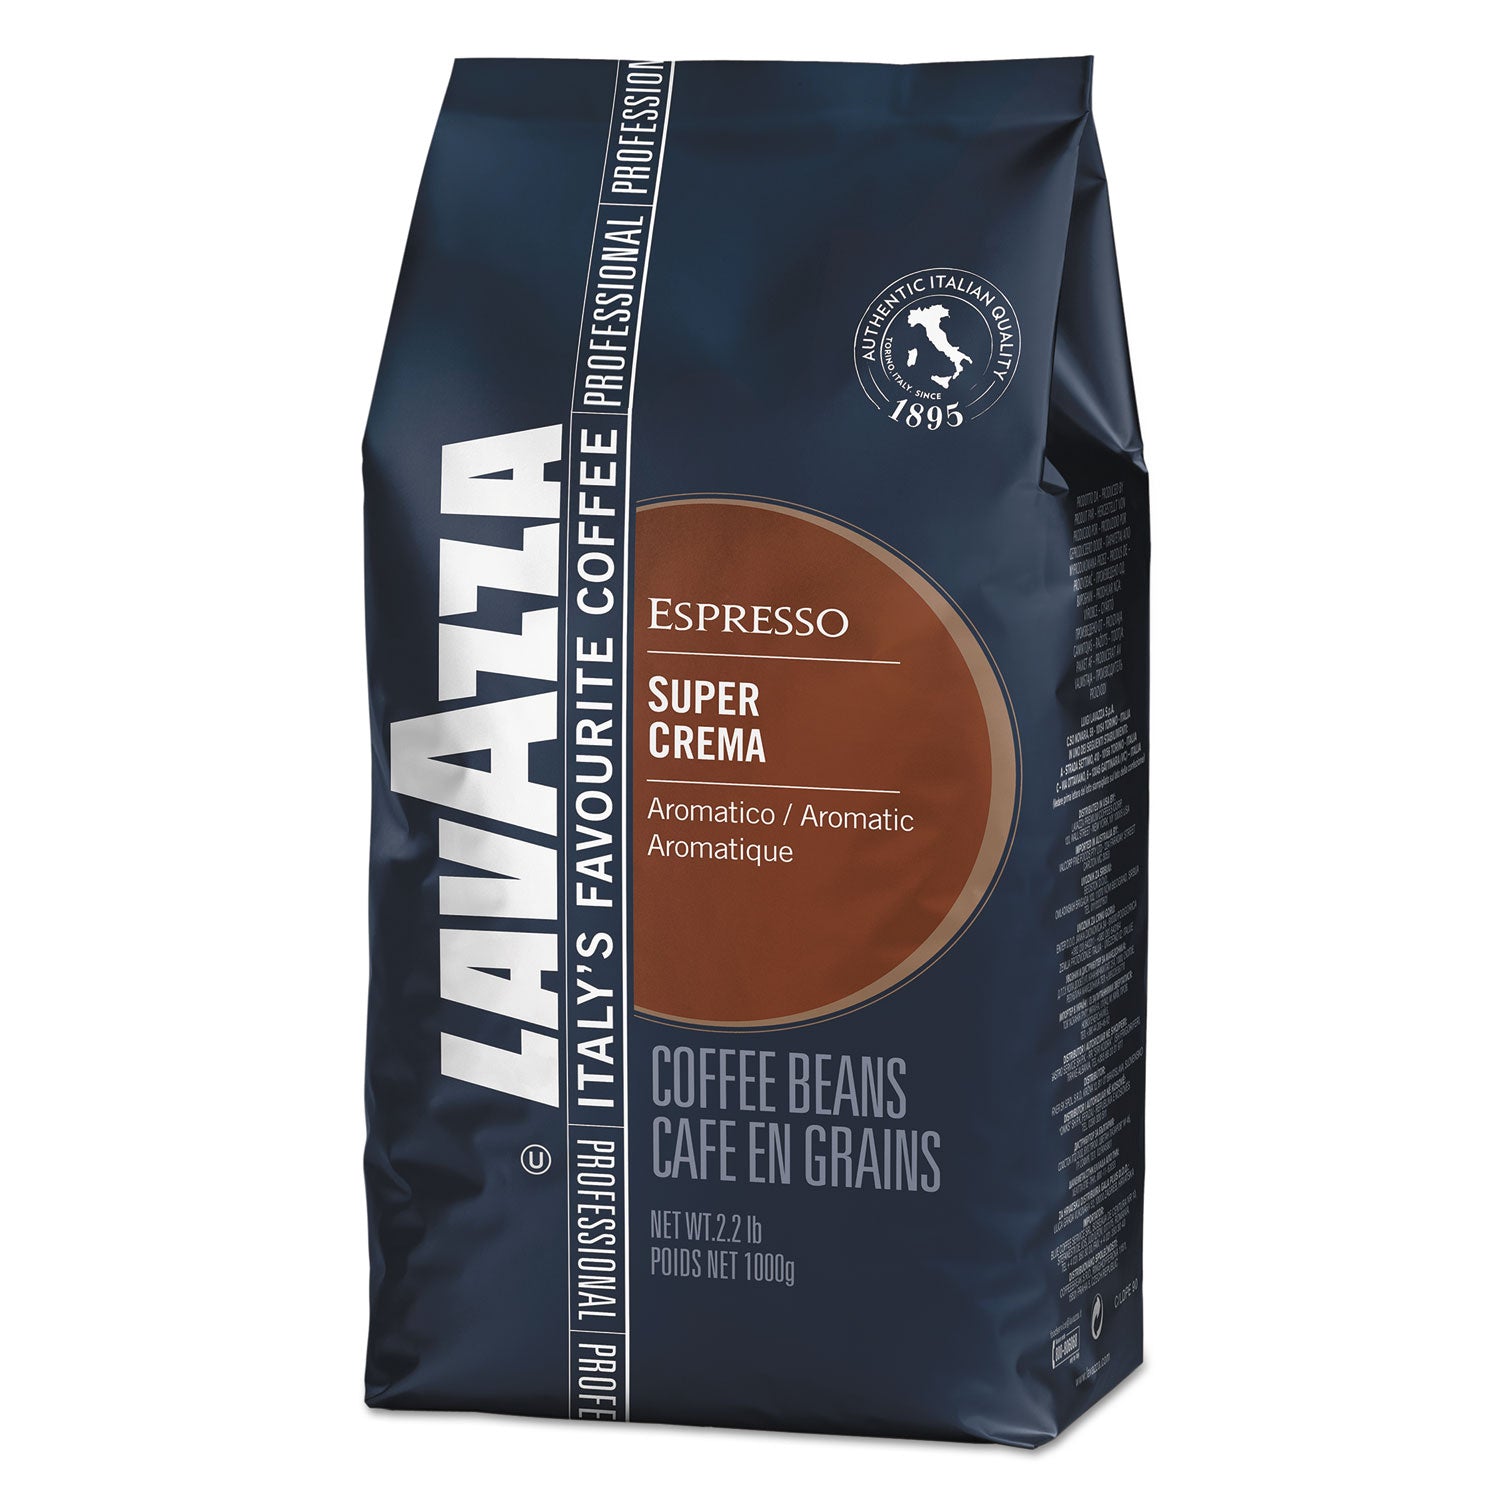 Super Crema Whole Bean Espresso Coffee, 2.2lb Bag, Vacuum-Packed - 